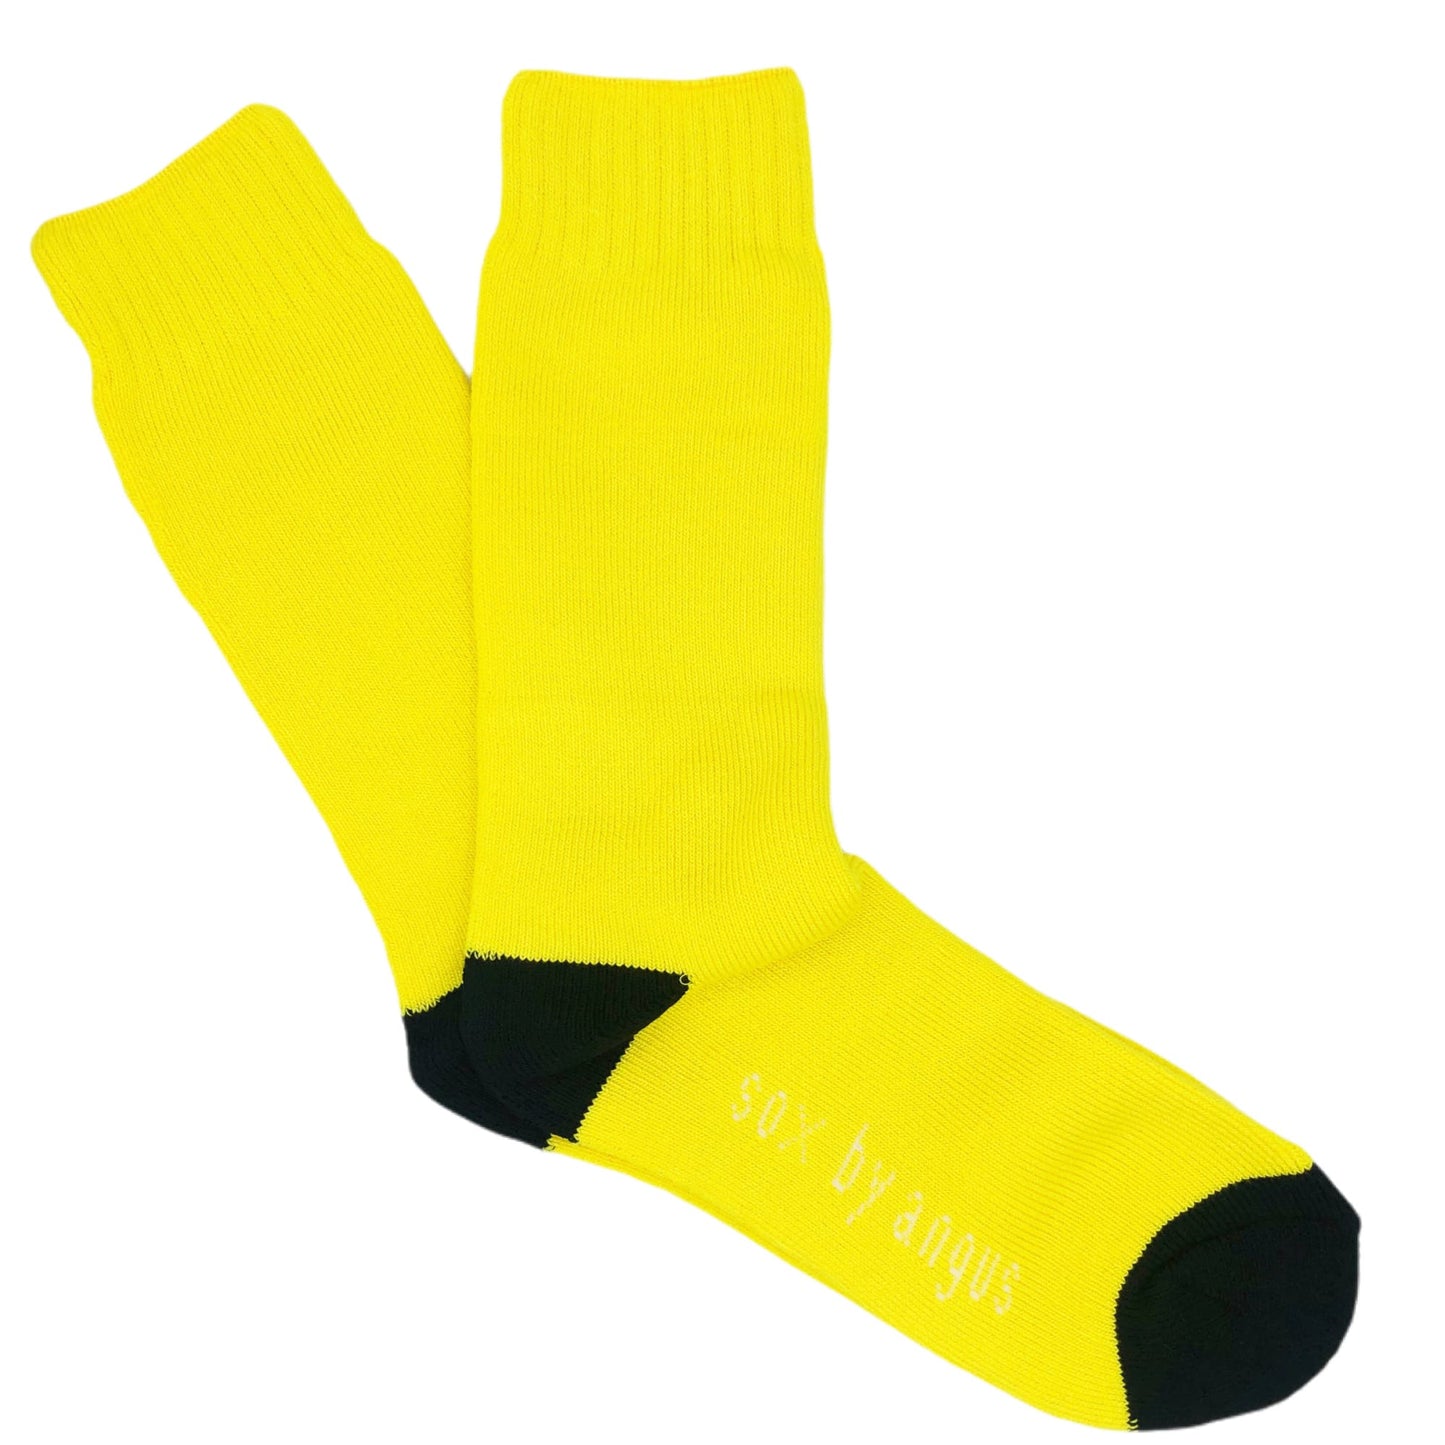 Bamboo Heavy Duty Socks - 3 Pairs Pack - Yellow/Black